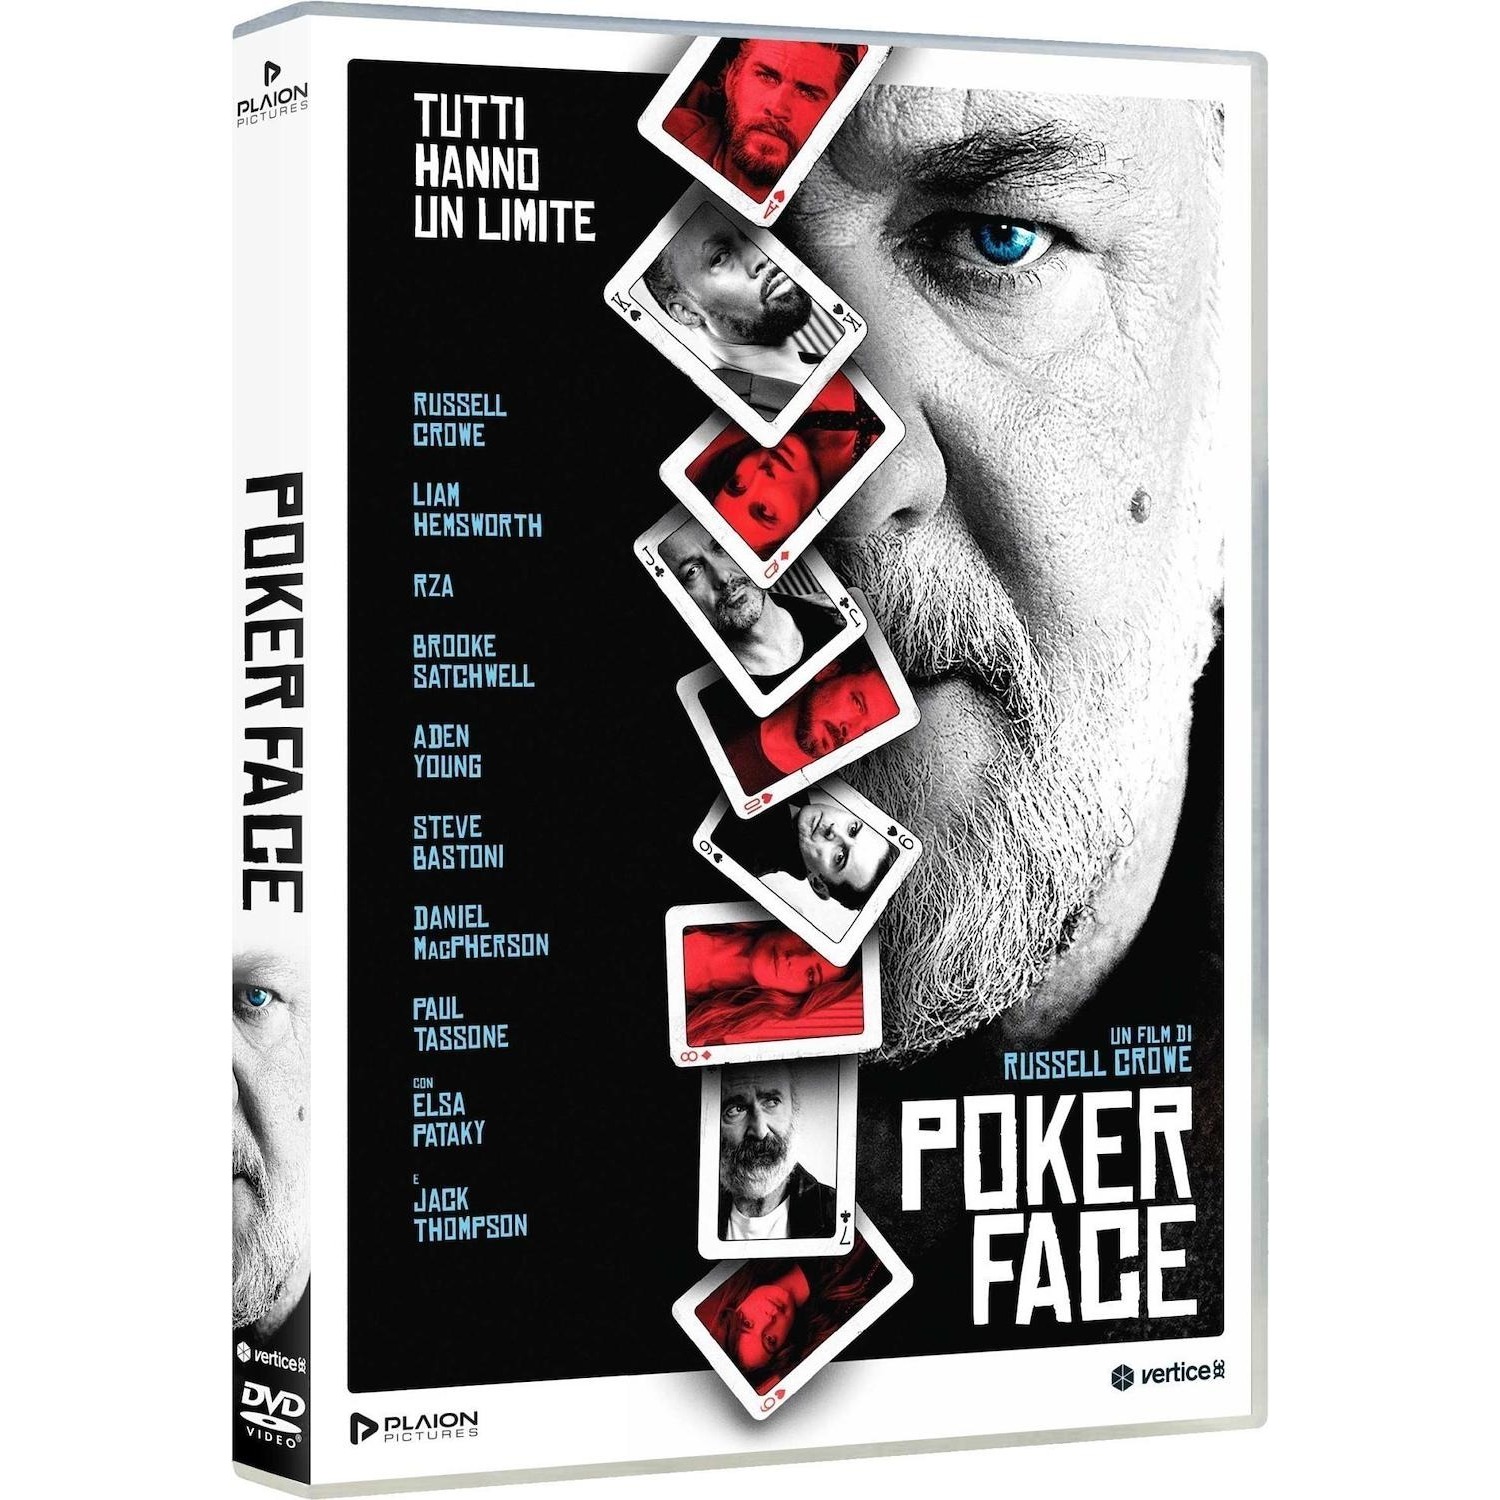 Immagine per DVD Poker Face da DIMOStore